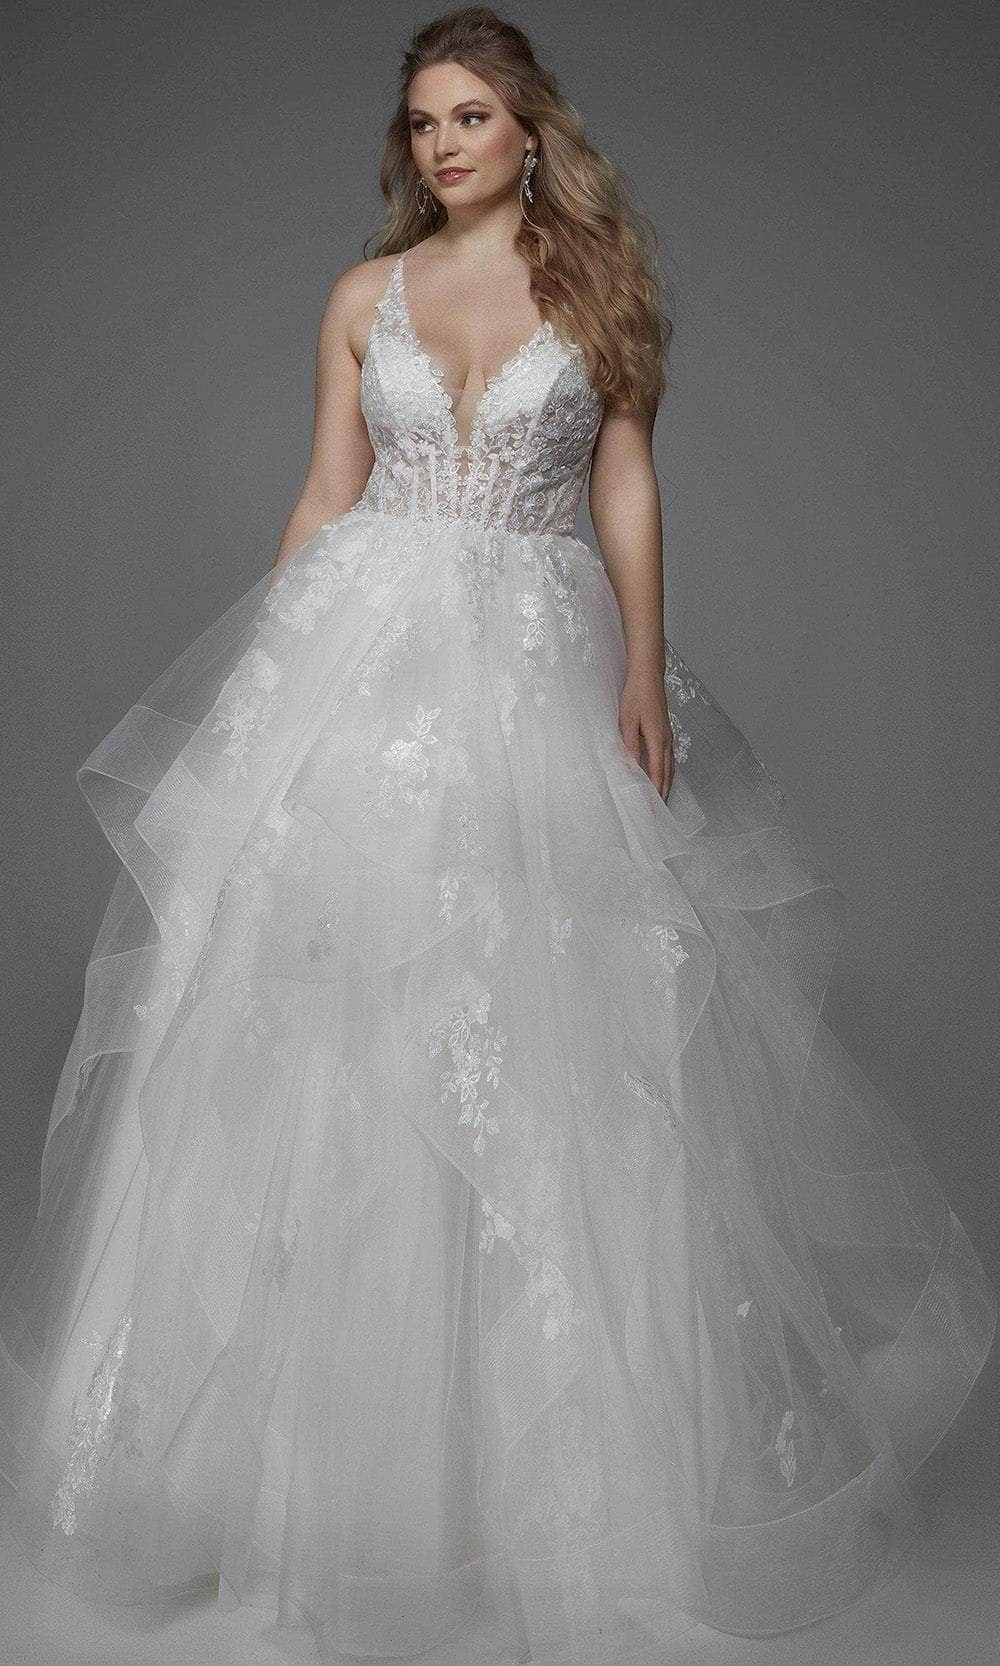 Alyce Paris 60903 - Plunging Floral Applique Ballgown Special Occasion Dress 000 / Diamond White